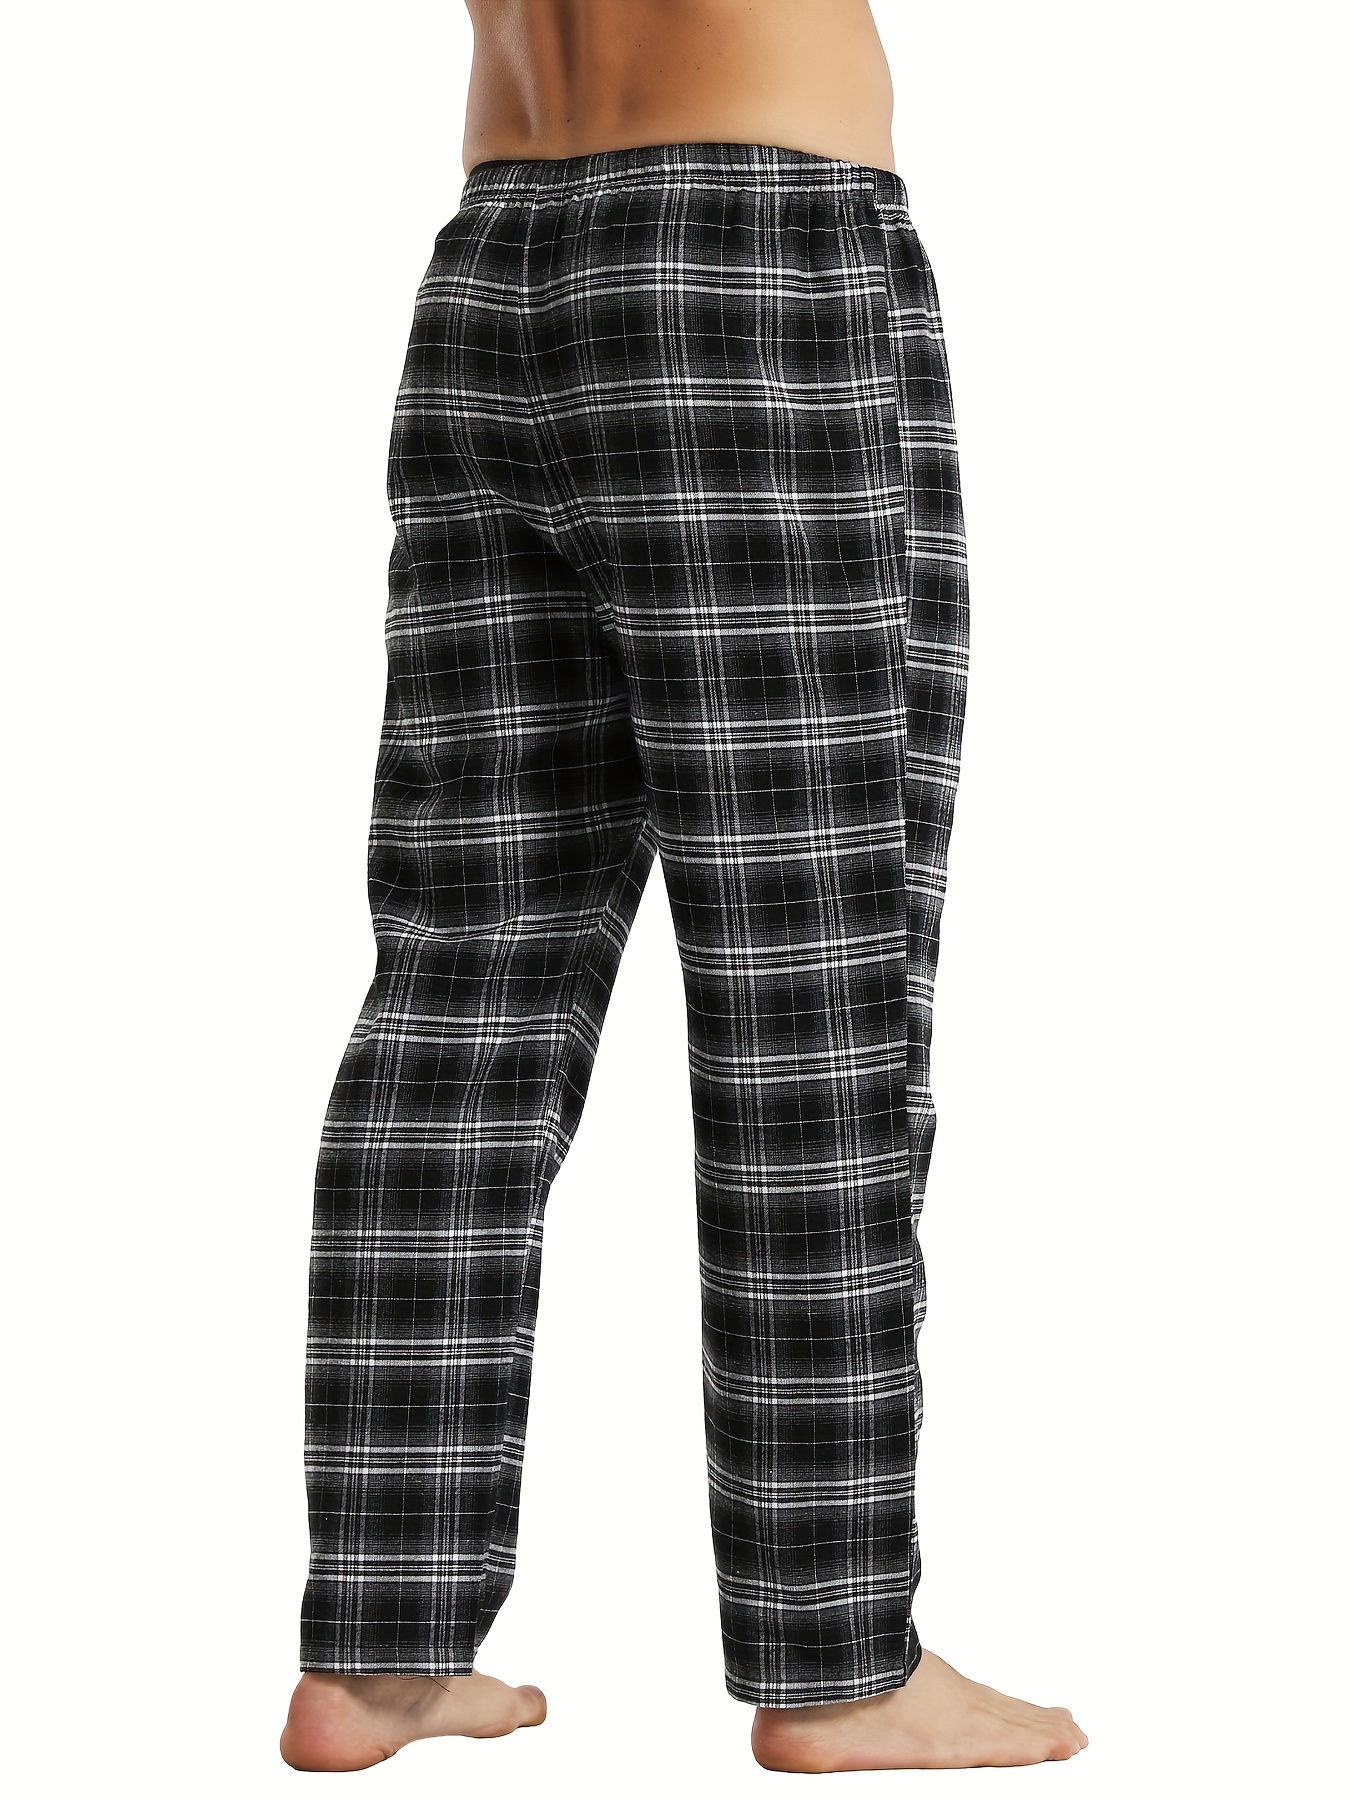 PRIMA Men's Cotton Pajama Lounge Sleep Pant Pyjama Bottoms Nightwear with  Elasticated Waistband, Blue XXL price in UAE,  UAE